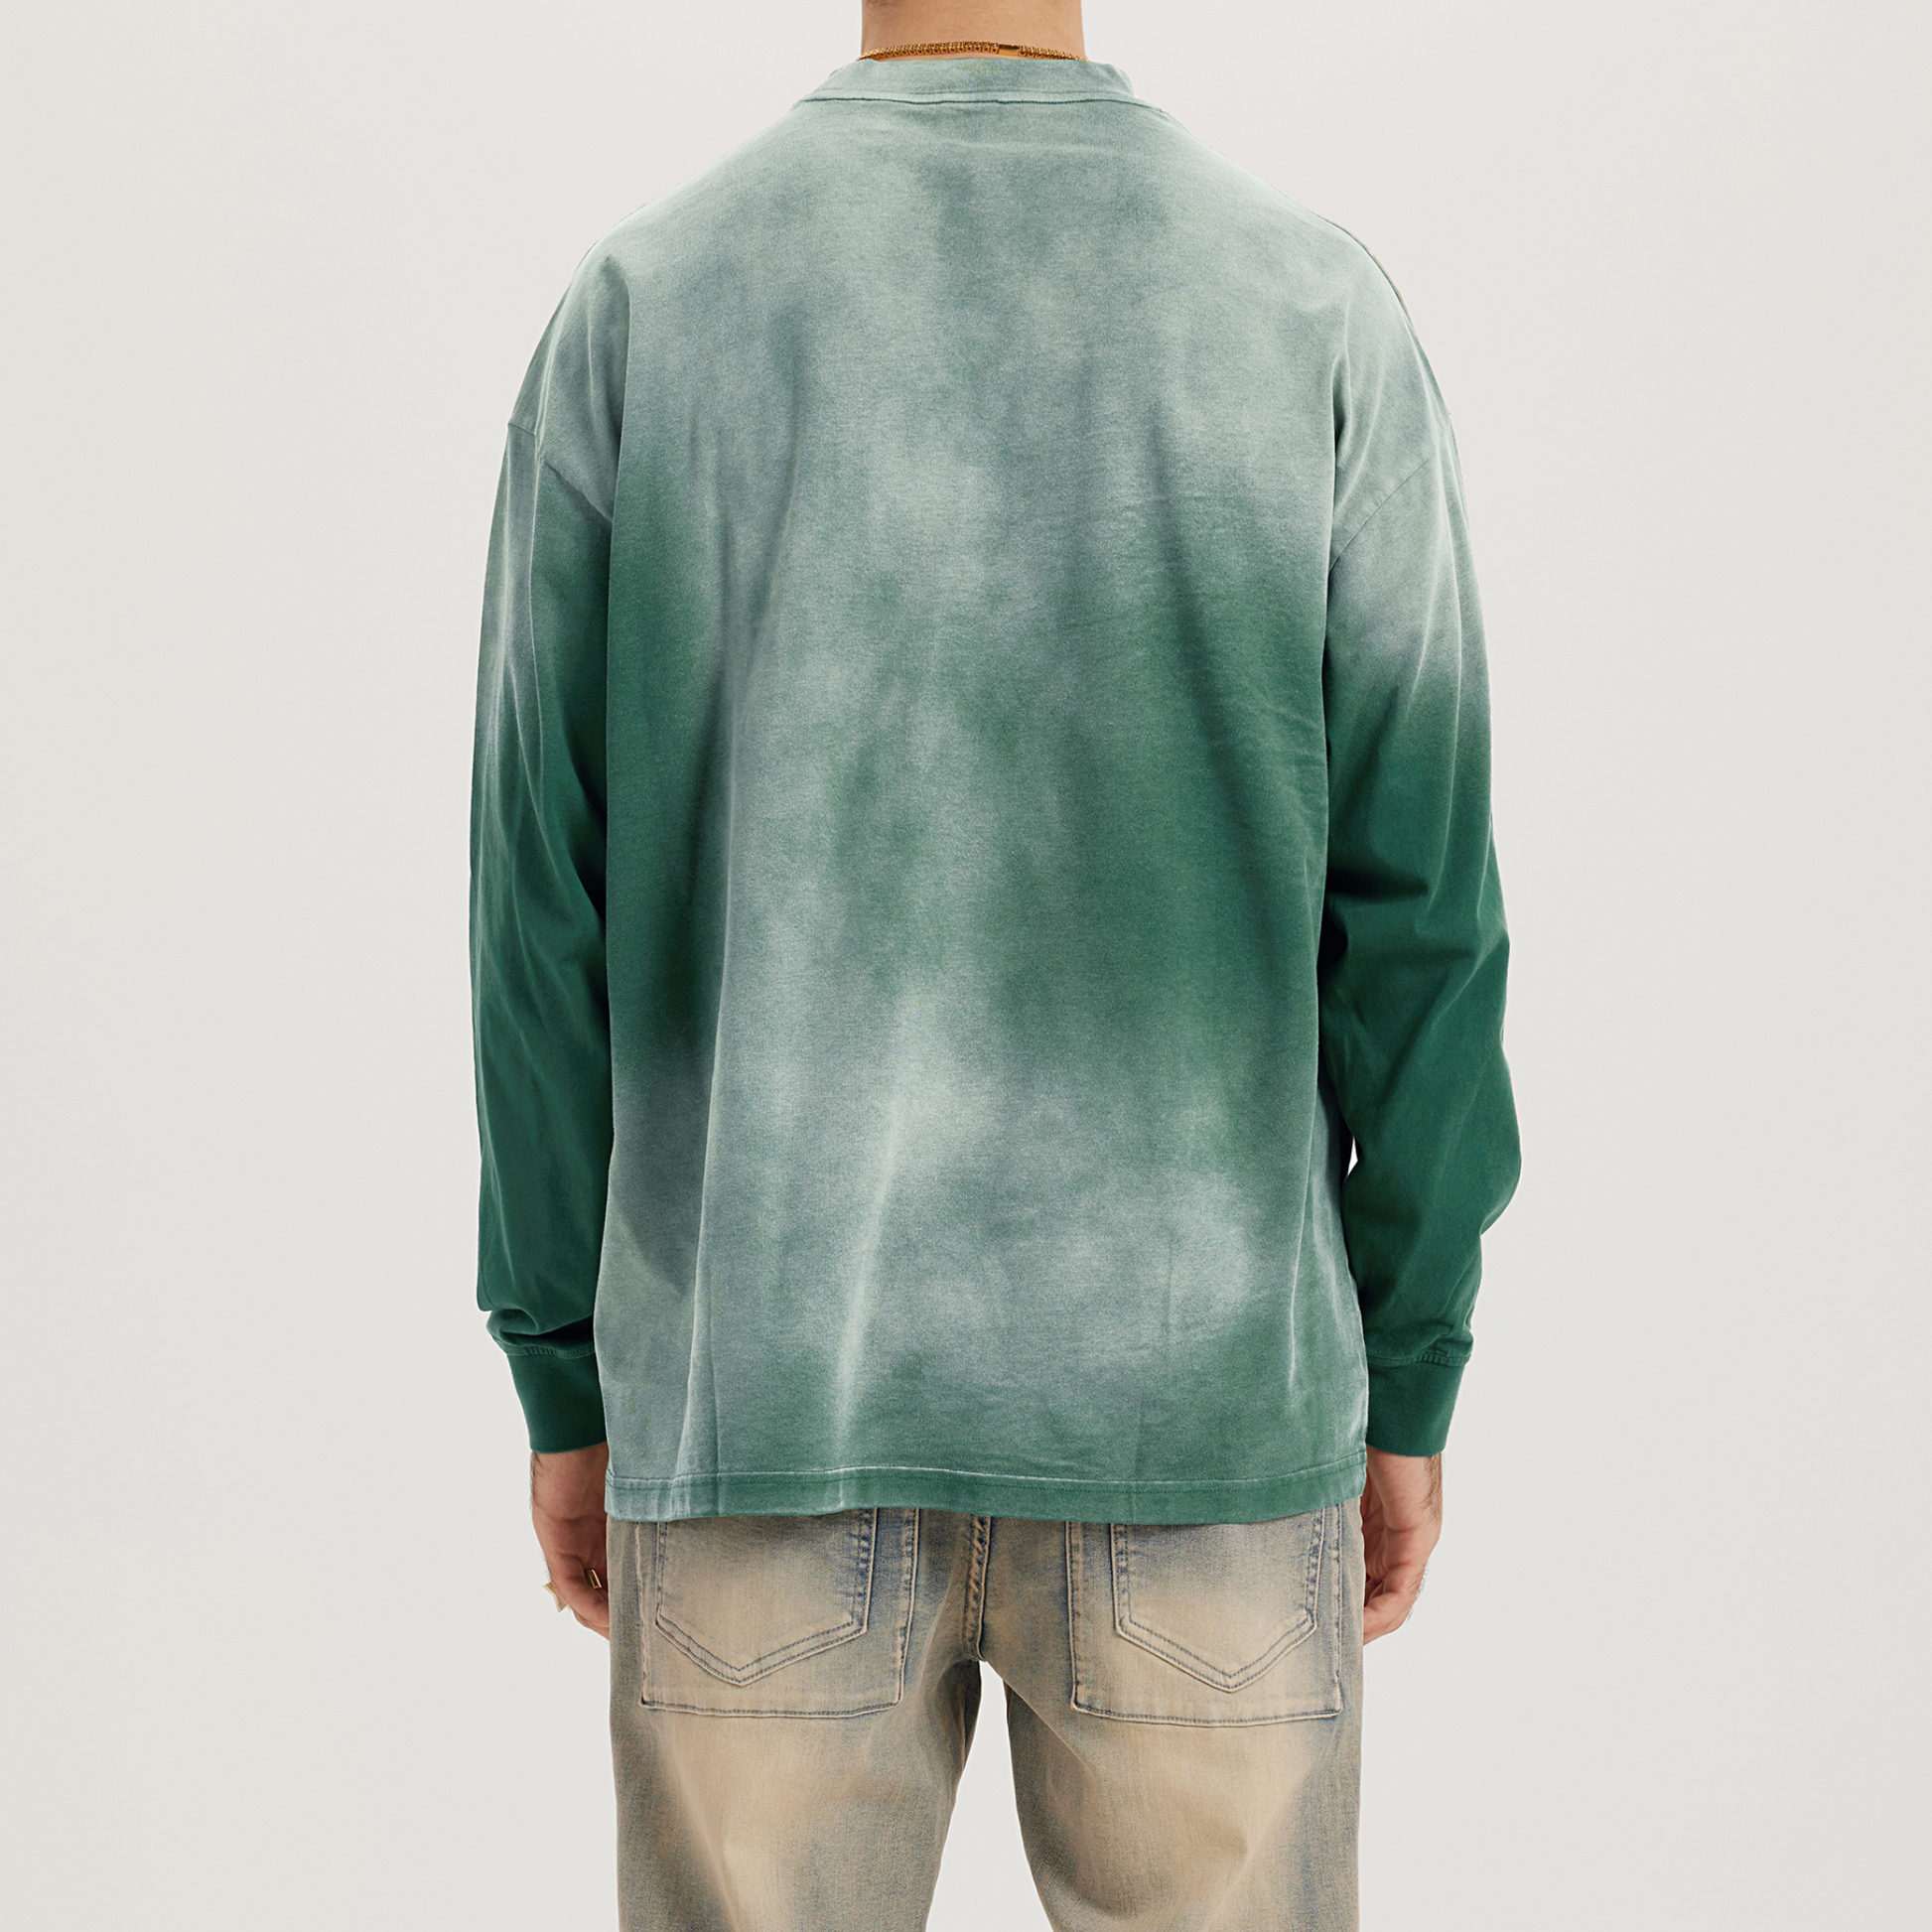 washed dyed green crewneck sweatshirt luxury streetwear clothing